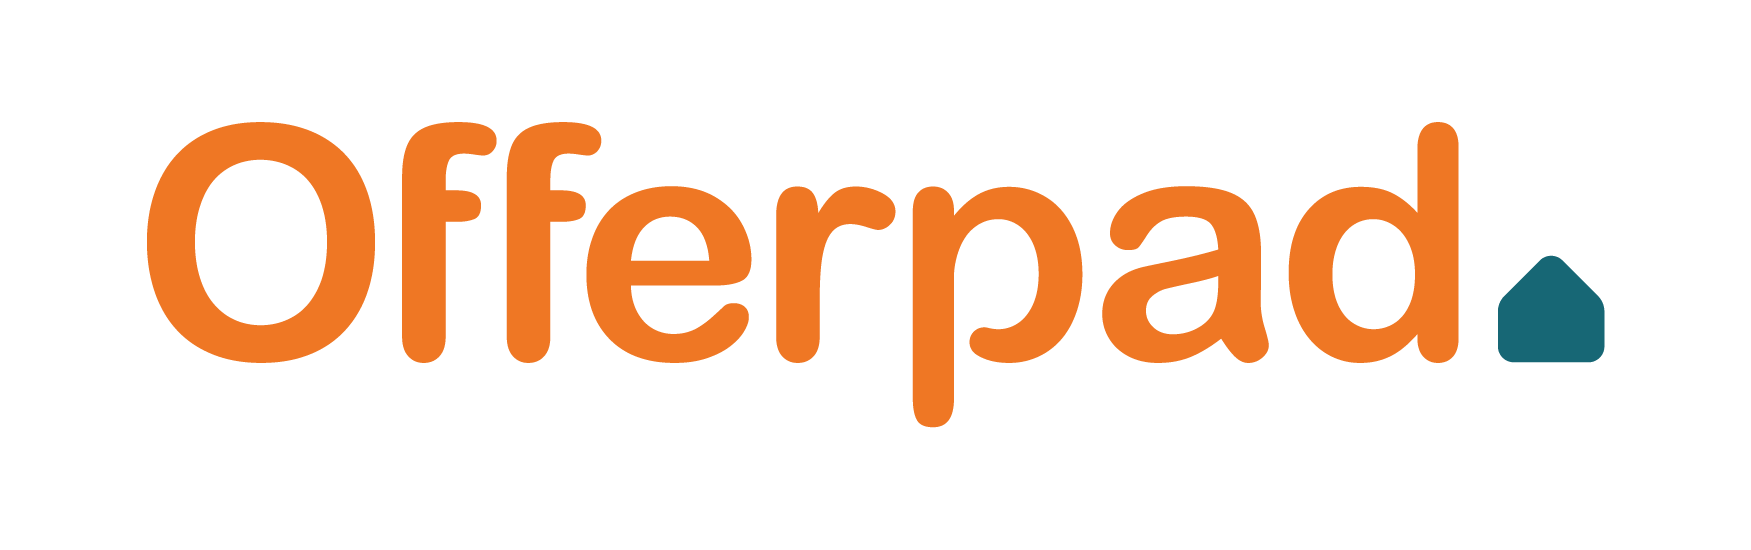 Offerpad_Color_Logo